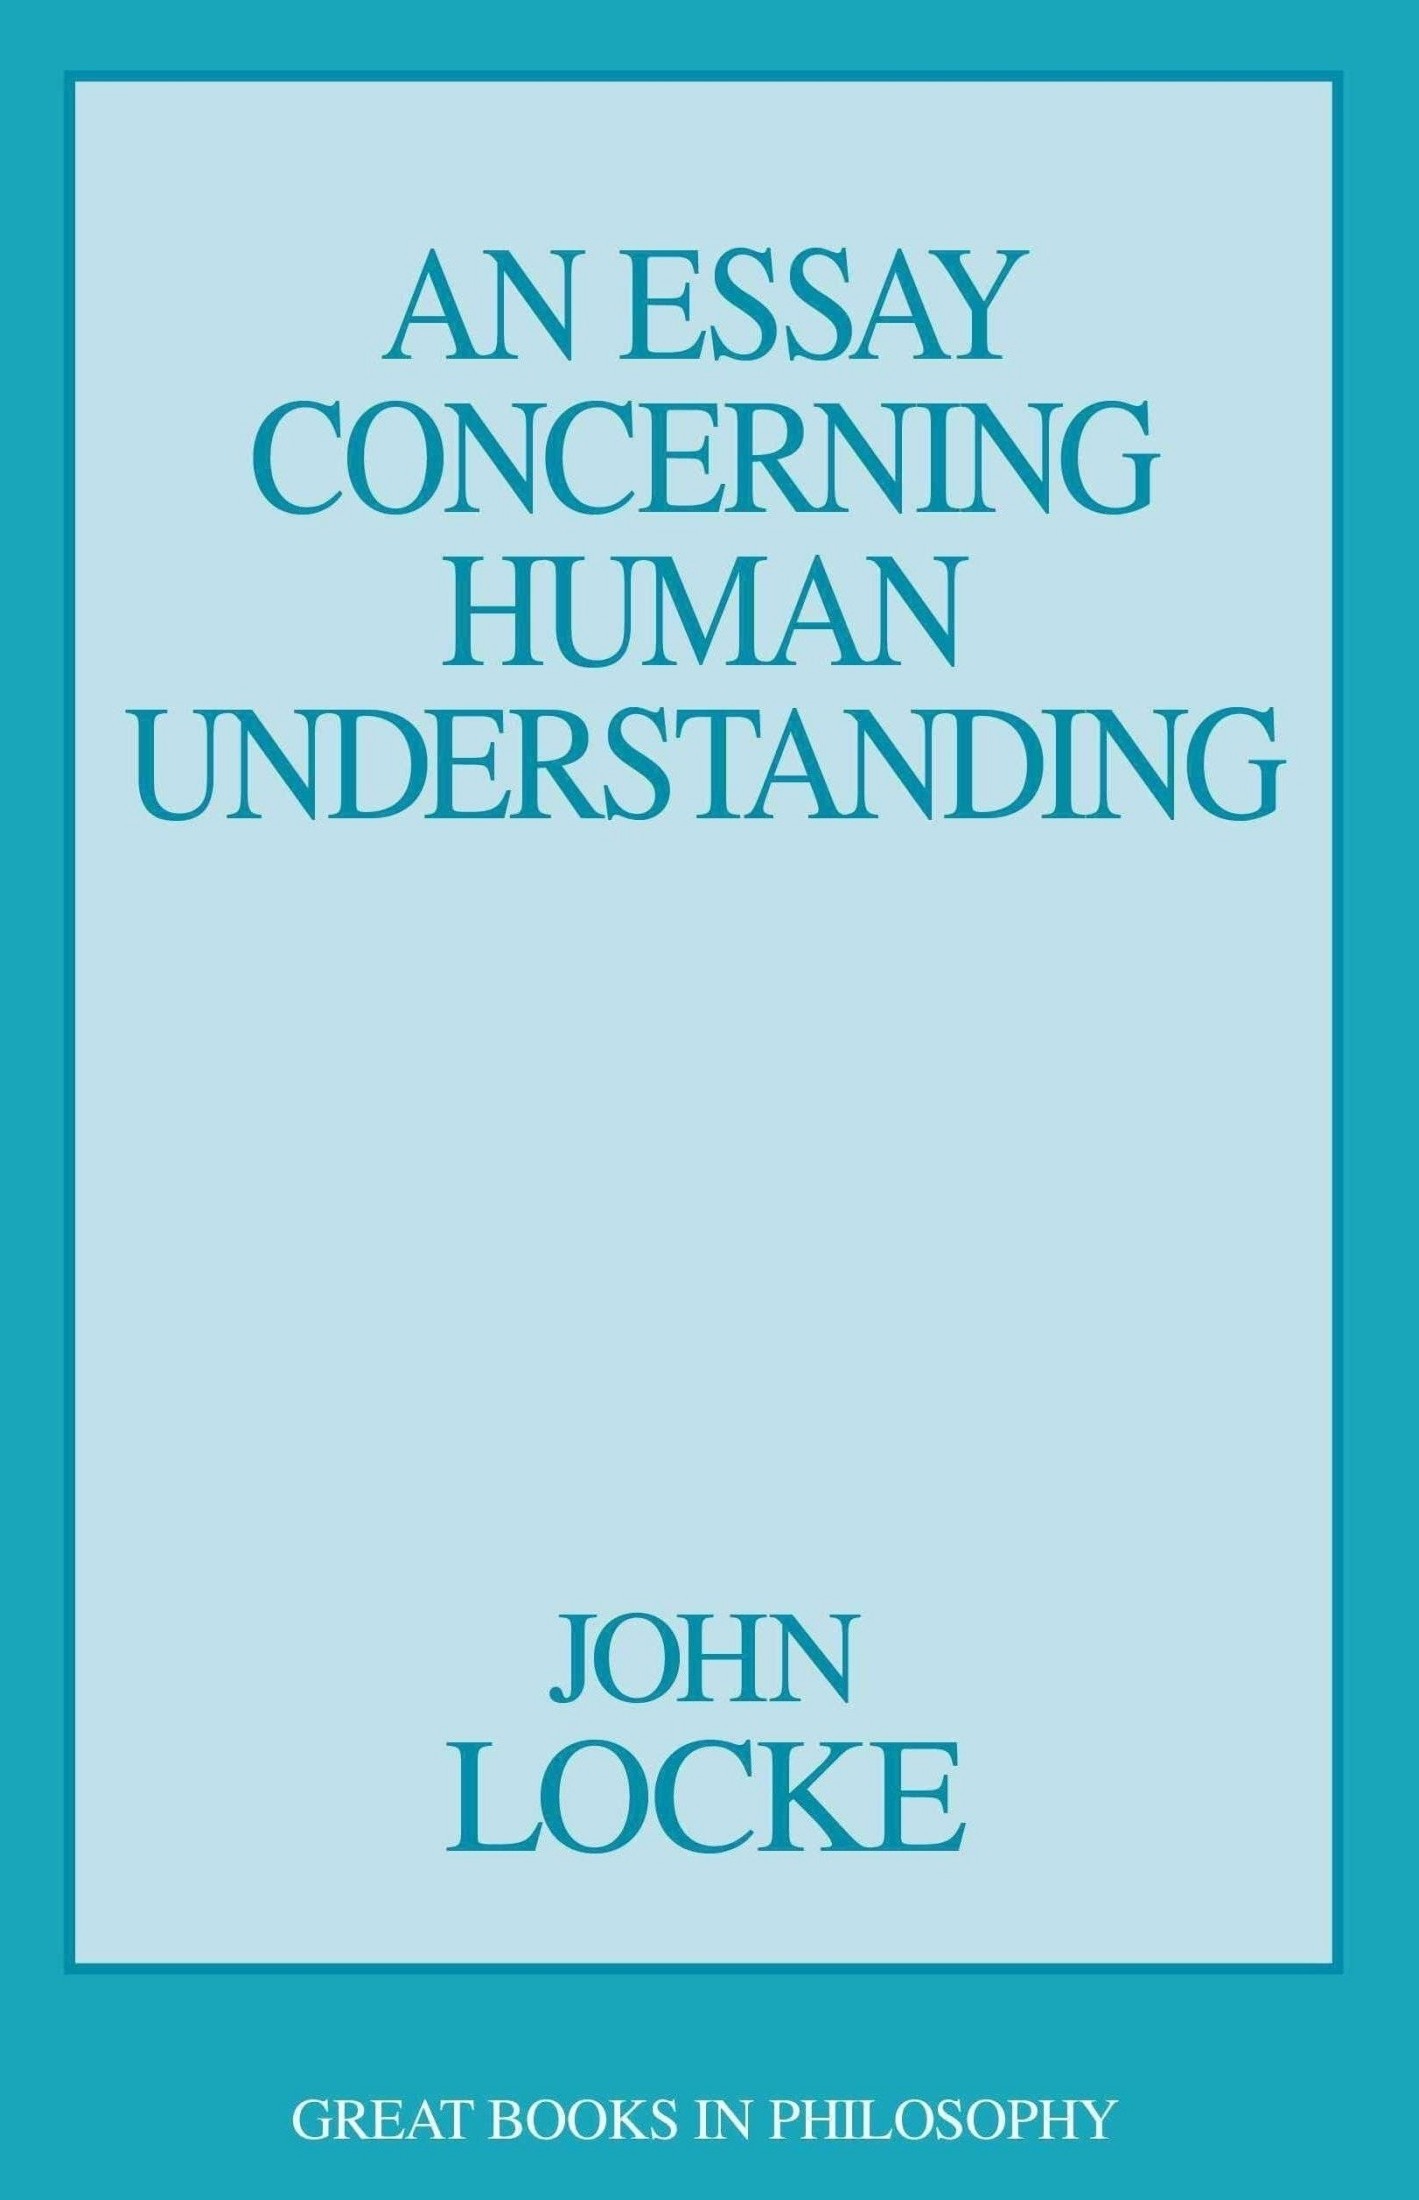 An Essay Concerning Human Understanding Book I -- Innate Notions